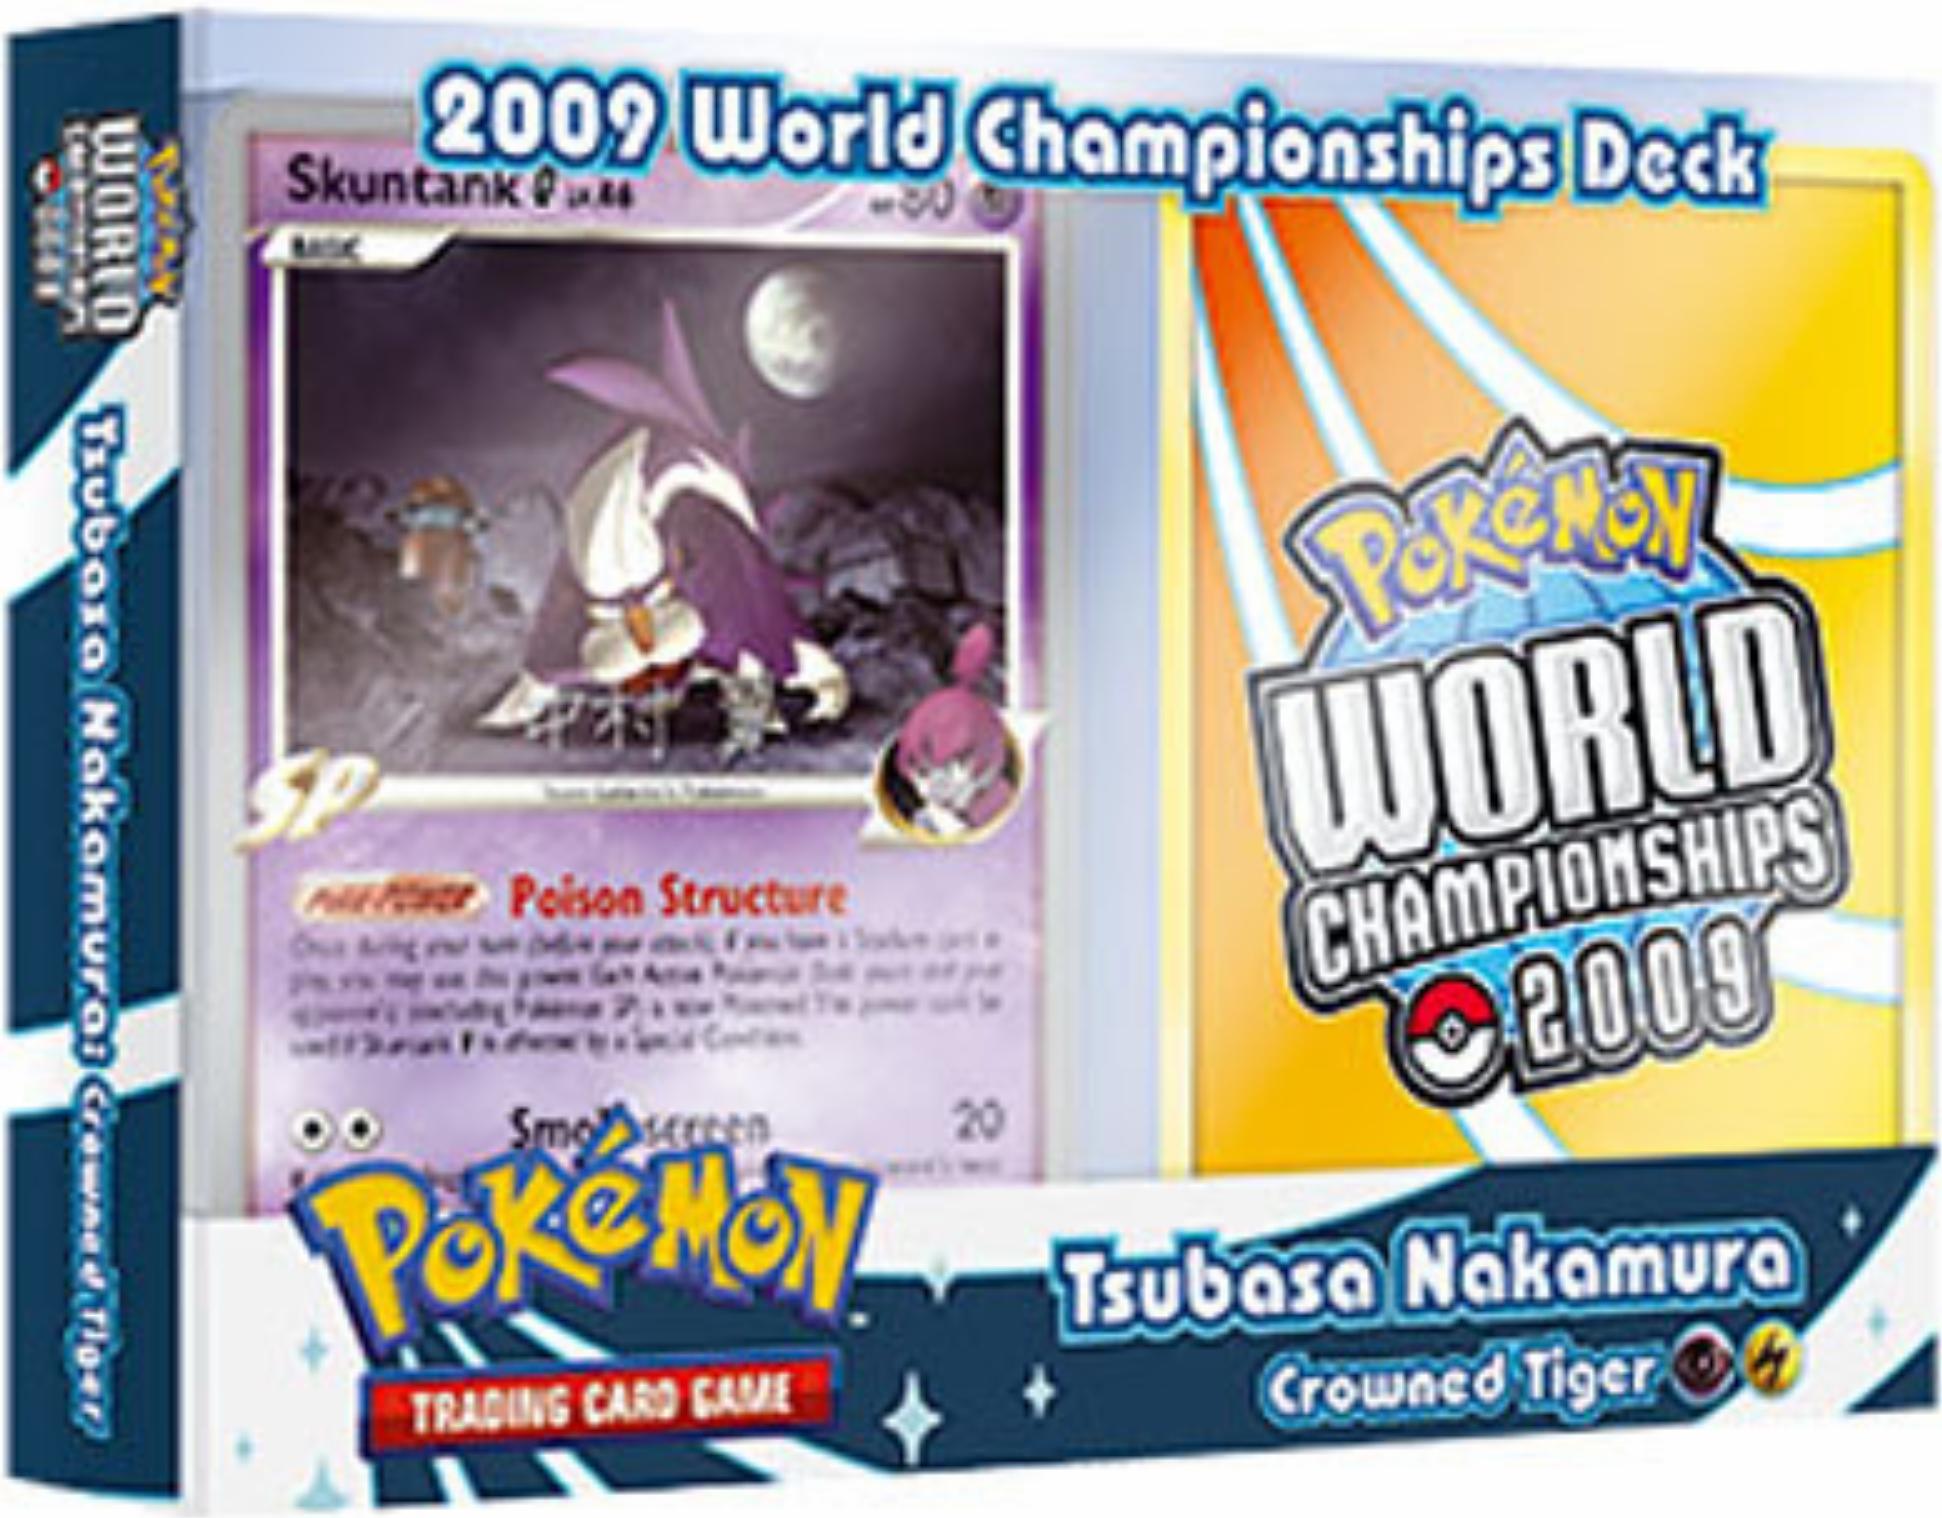 2009 World Championships Deck (Crowned Tiger - Tsubasa Kamura) | Total Play